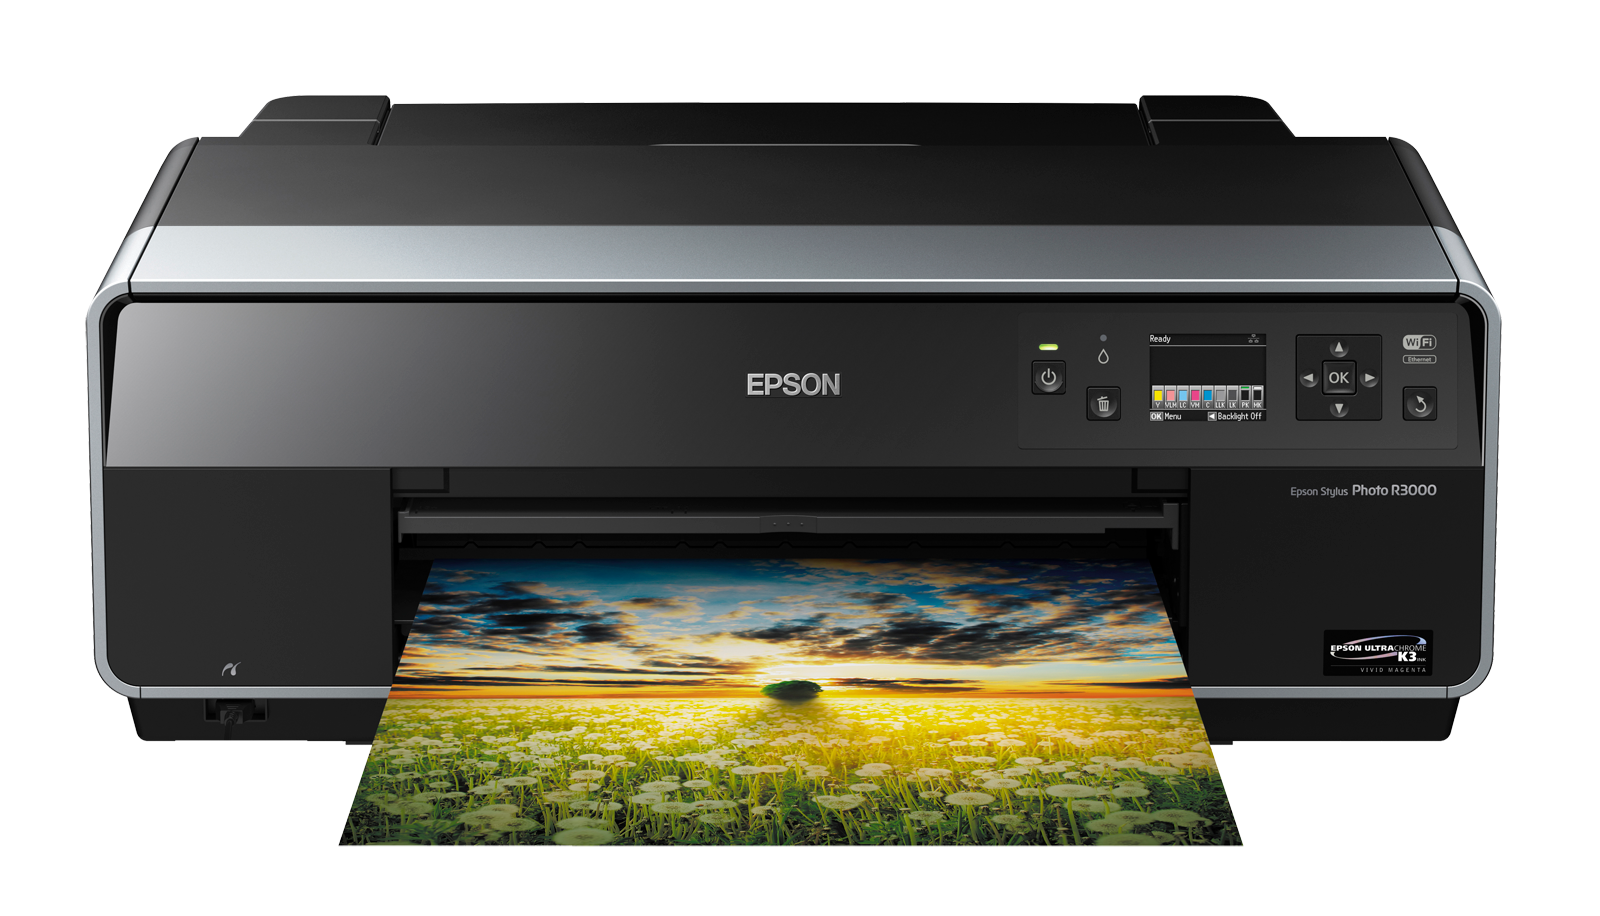 Epson Stylus Photo R3000 | Fotografía Profesional y Artes Gráficas Impresoras de de tinta | Impresoras | Productos | Epson España